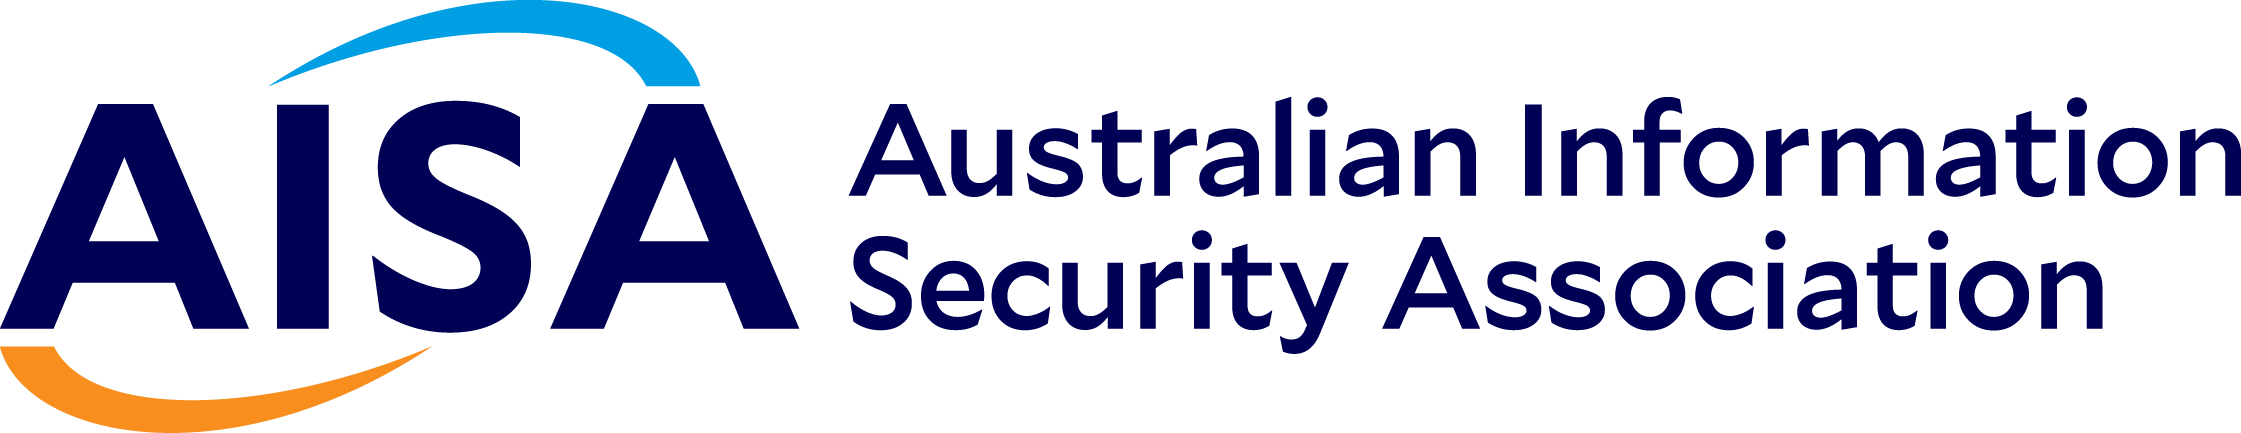 AISA Australian Information Security Association logo